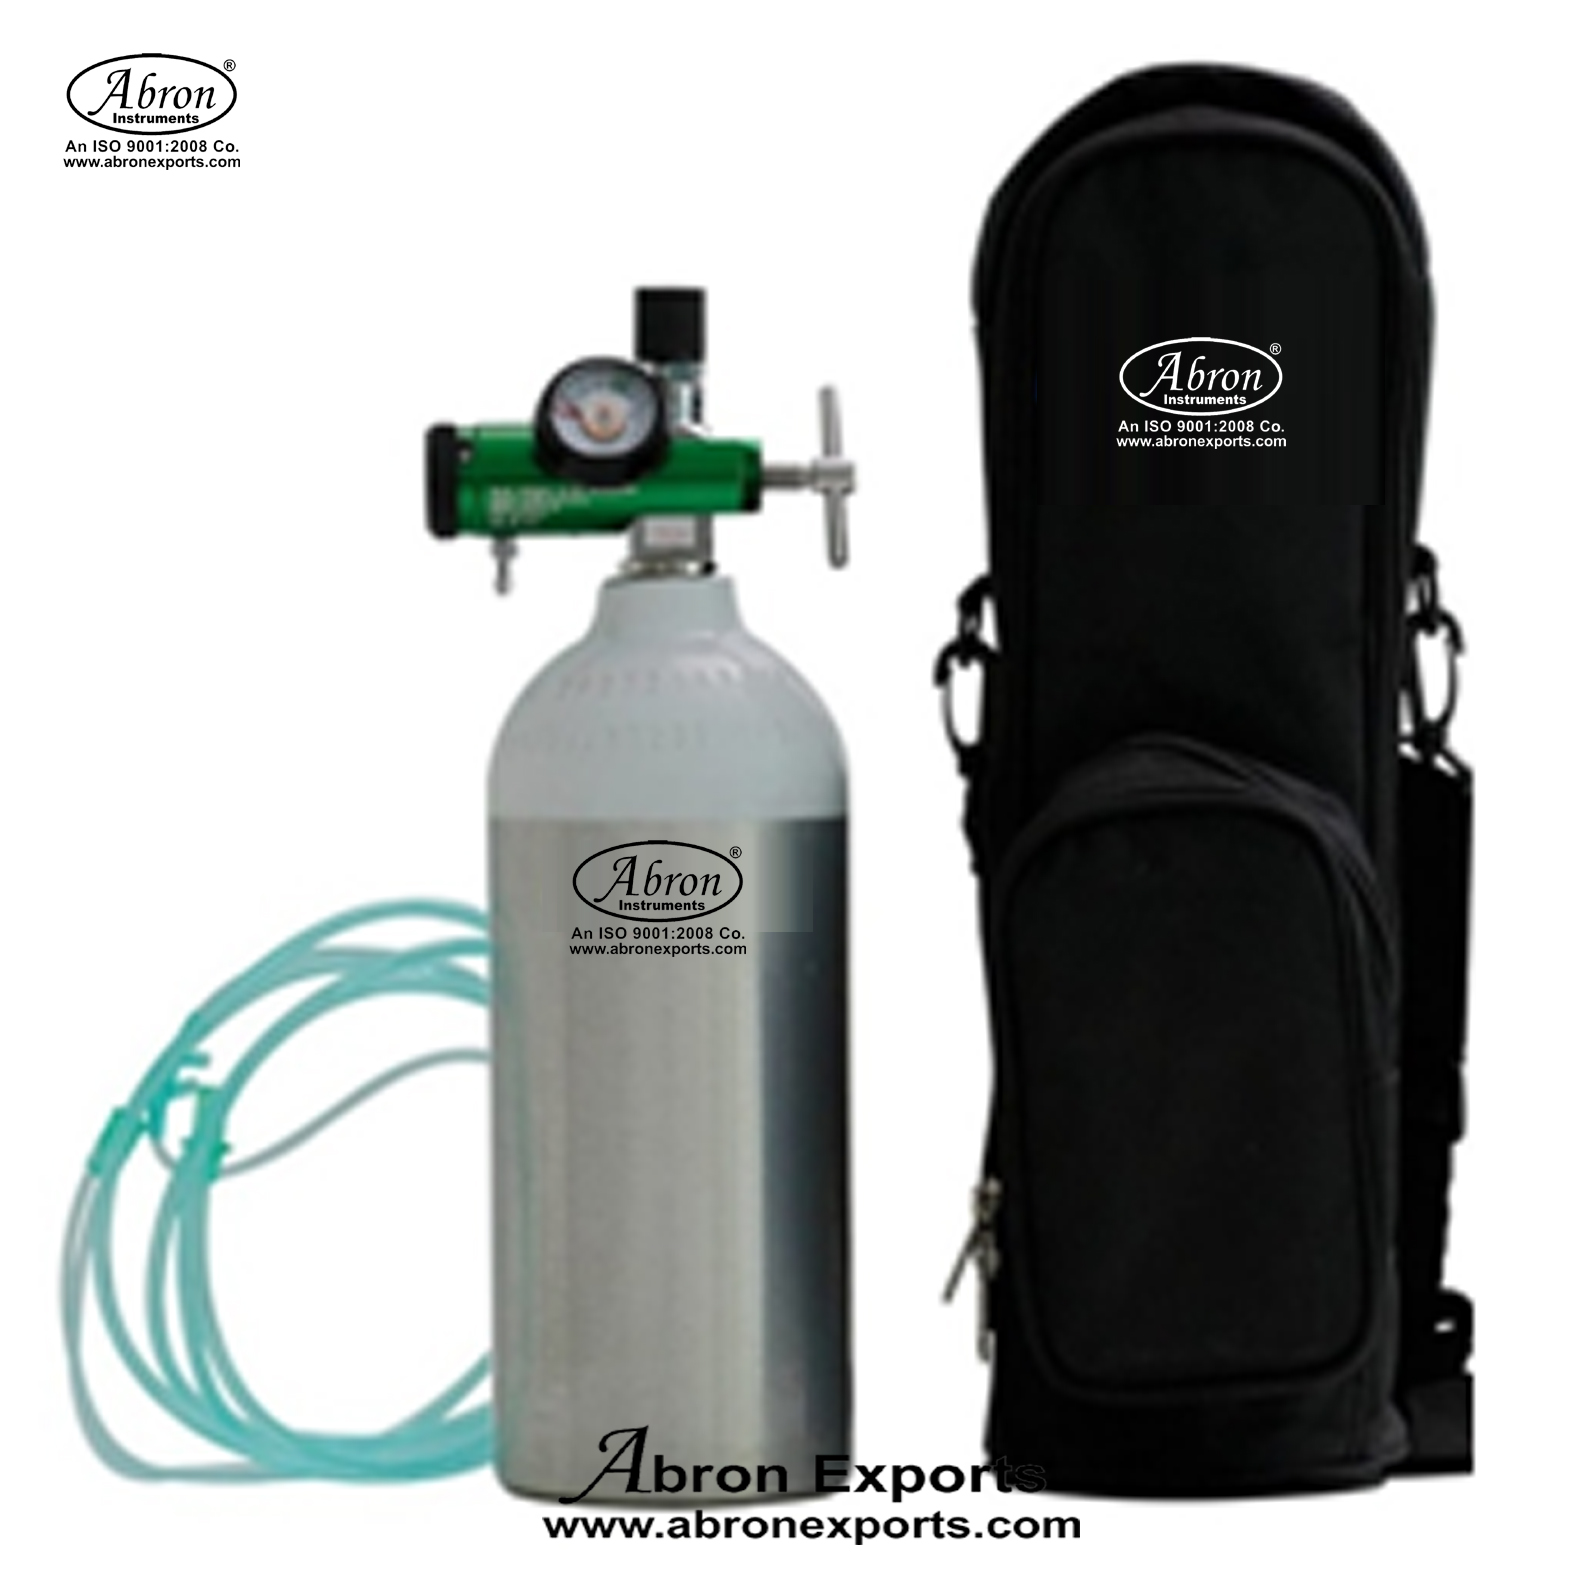 oxygen cylinder 330Lt 24CFT Aluminium or steel with regulator Gauge ICU use Portable Hospital Medical Abron ABM-2360CX3H 